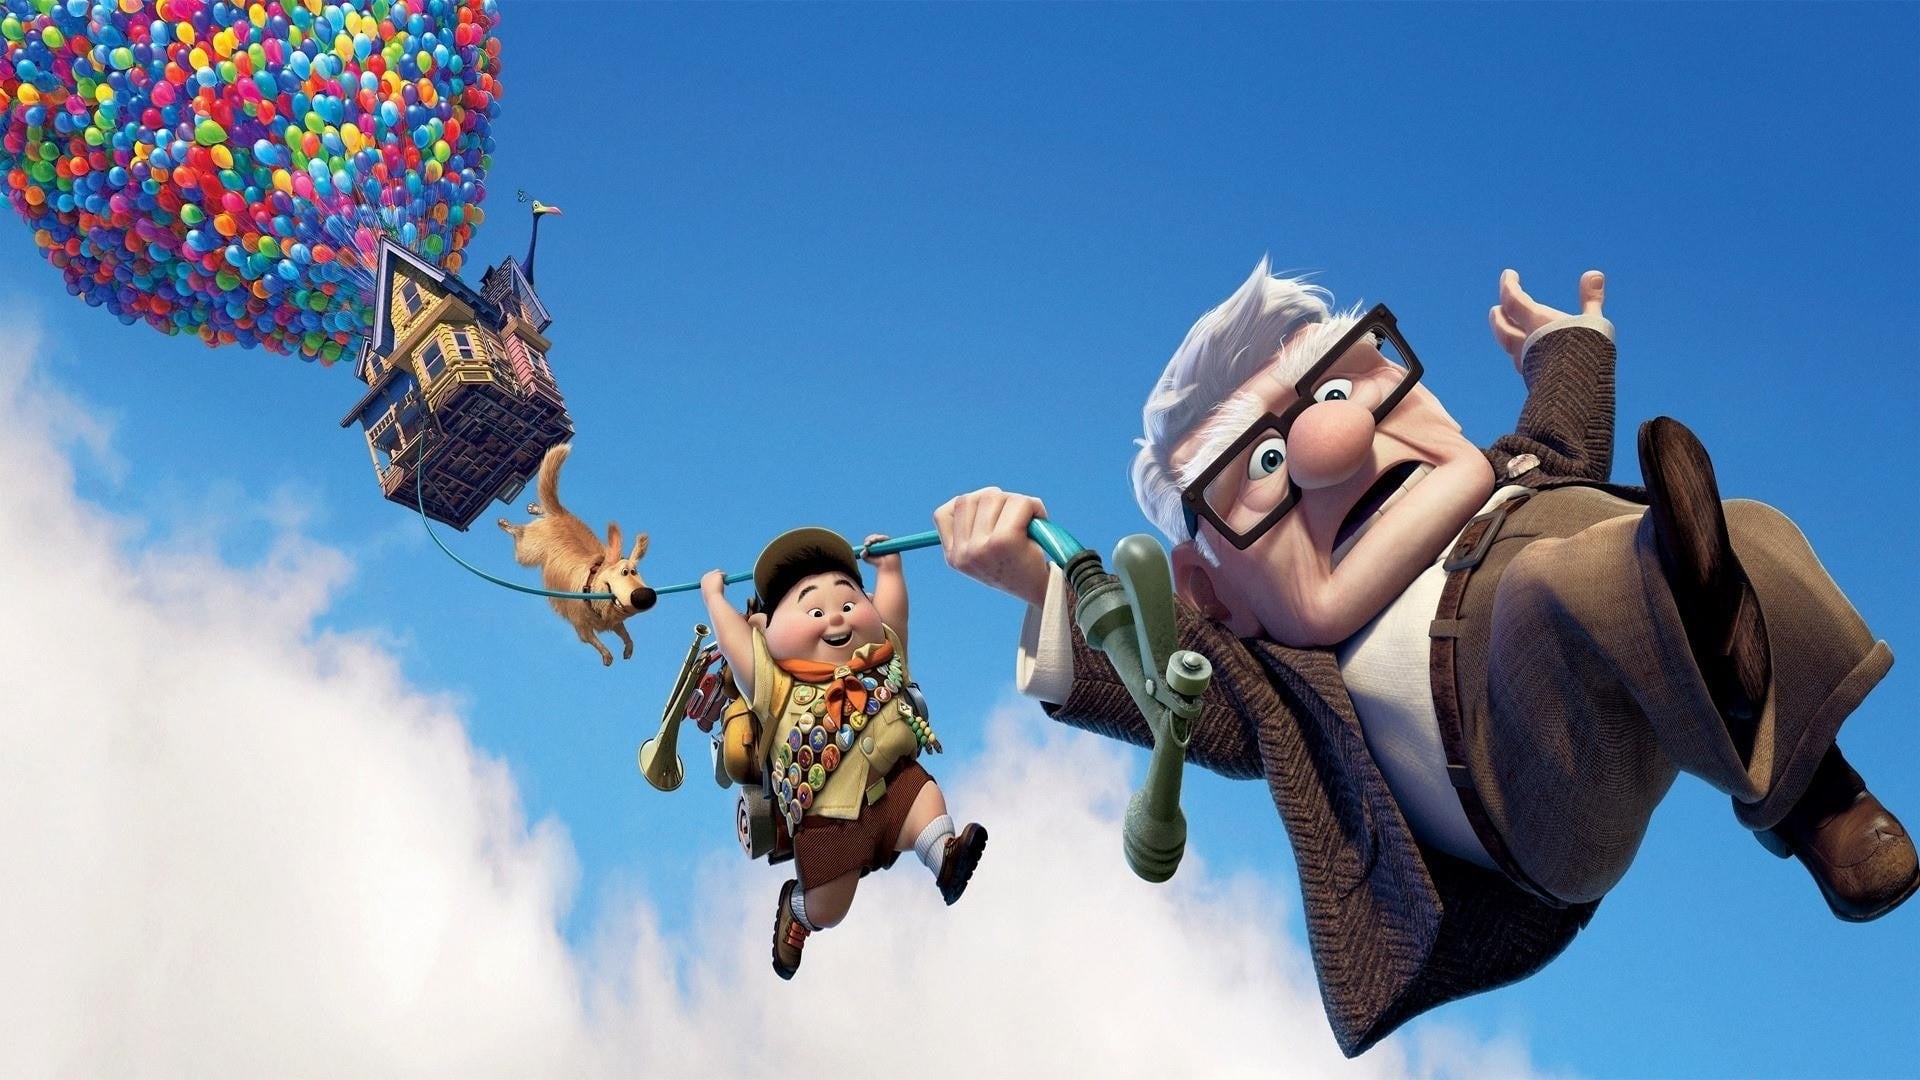 UP | Elenco film Pixar